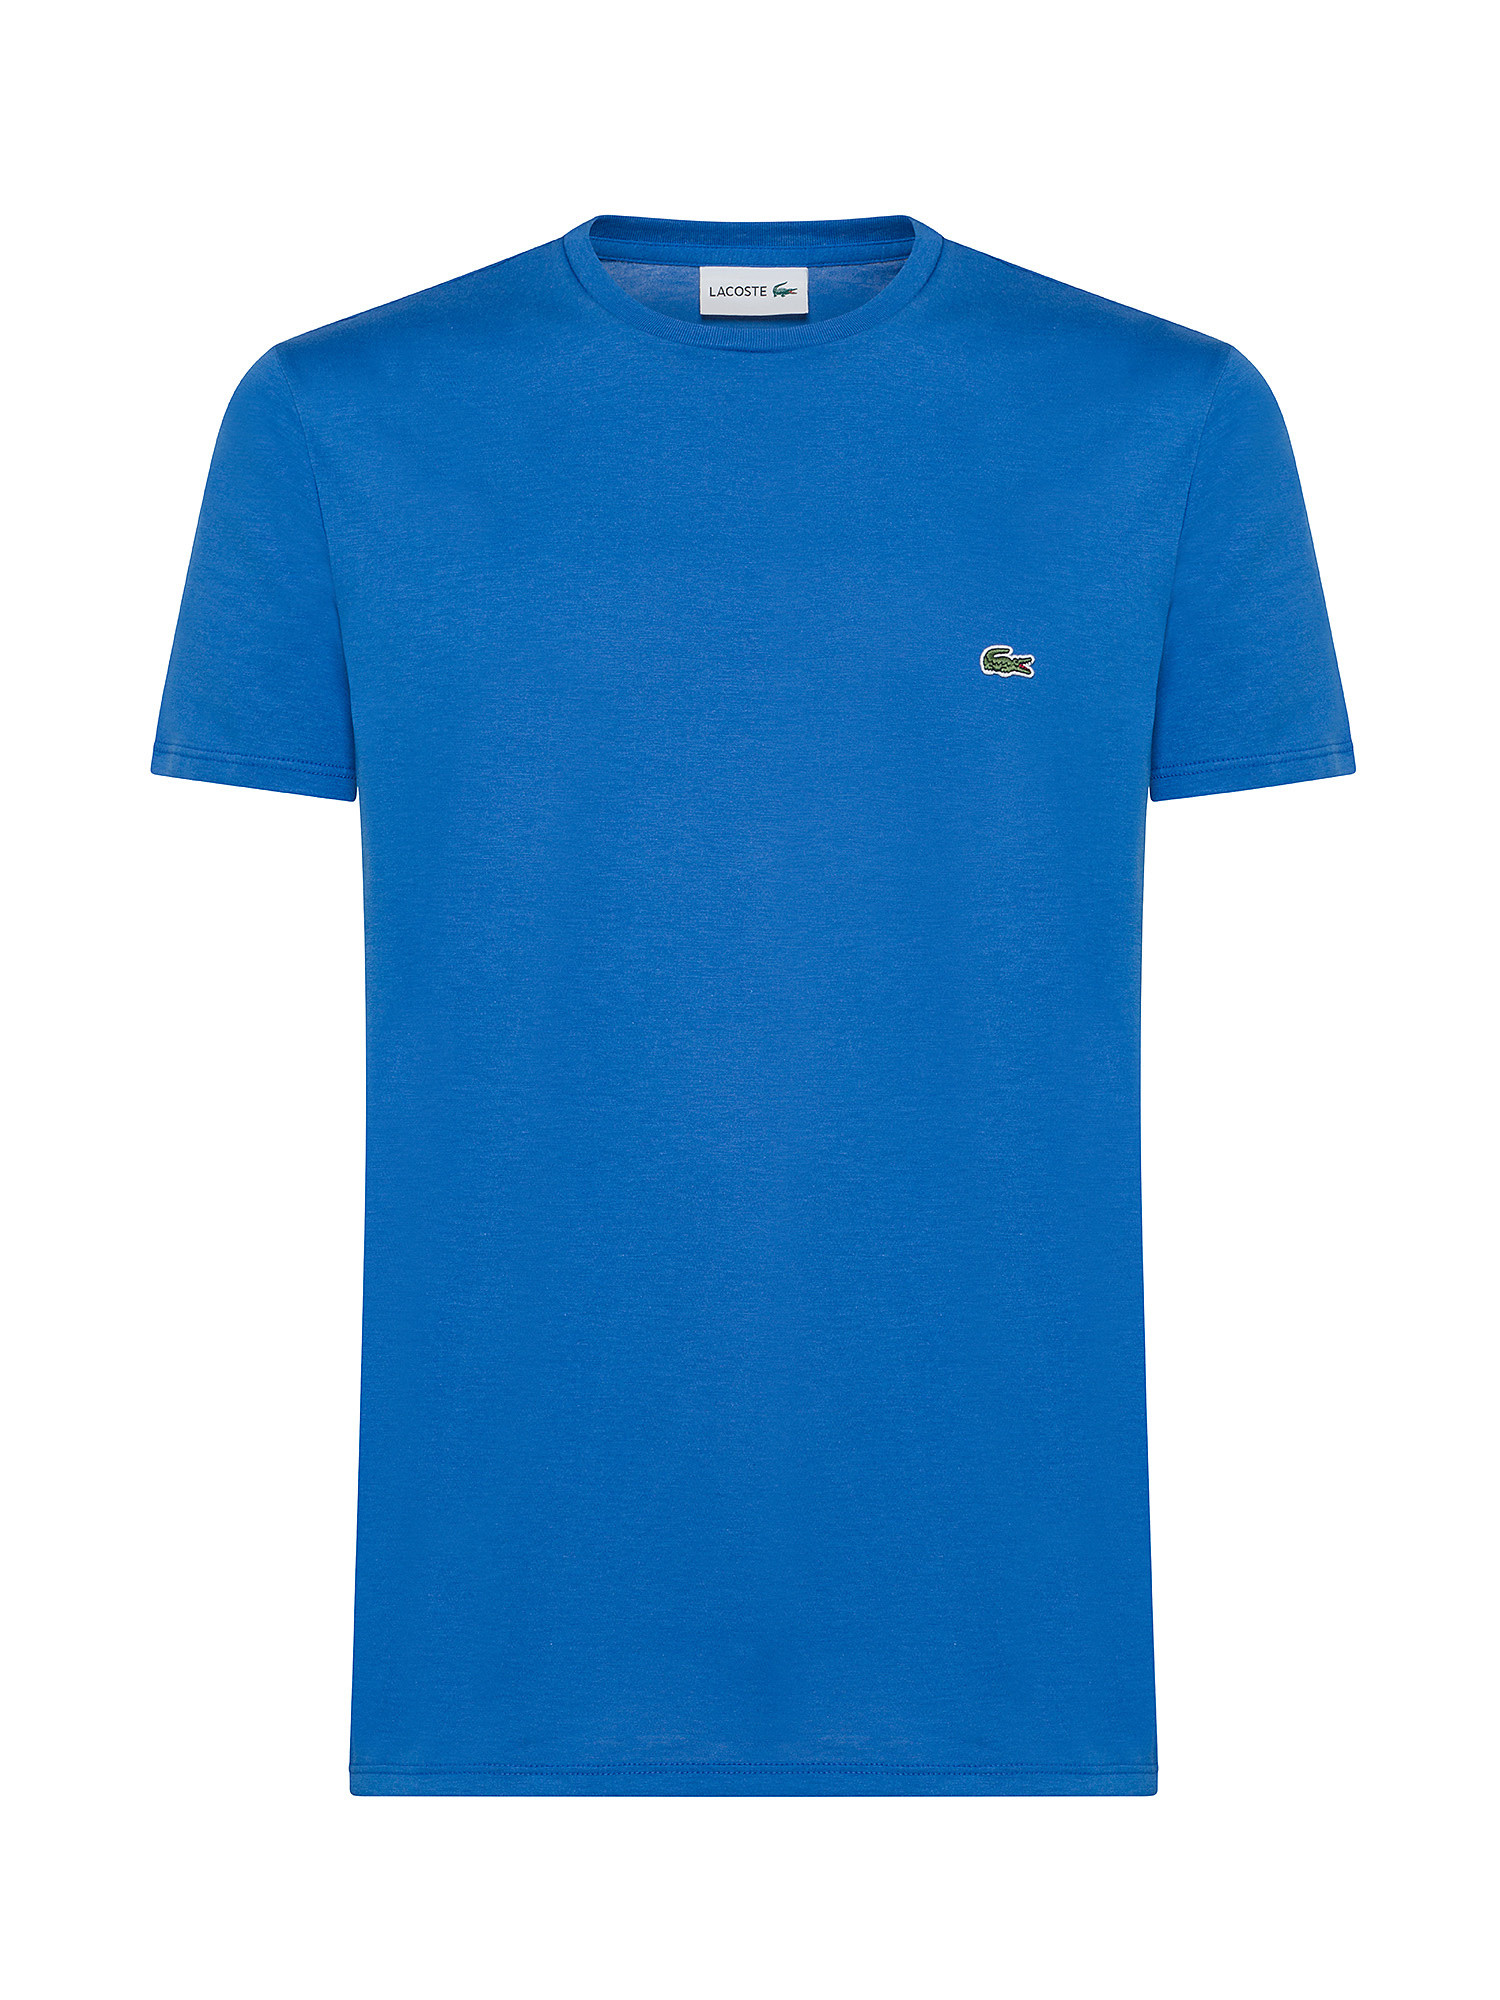 Lacoste - Pima cotton jersey crewneck T-shirt, Blue, large image number 0